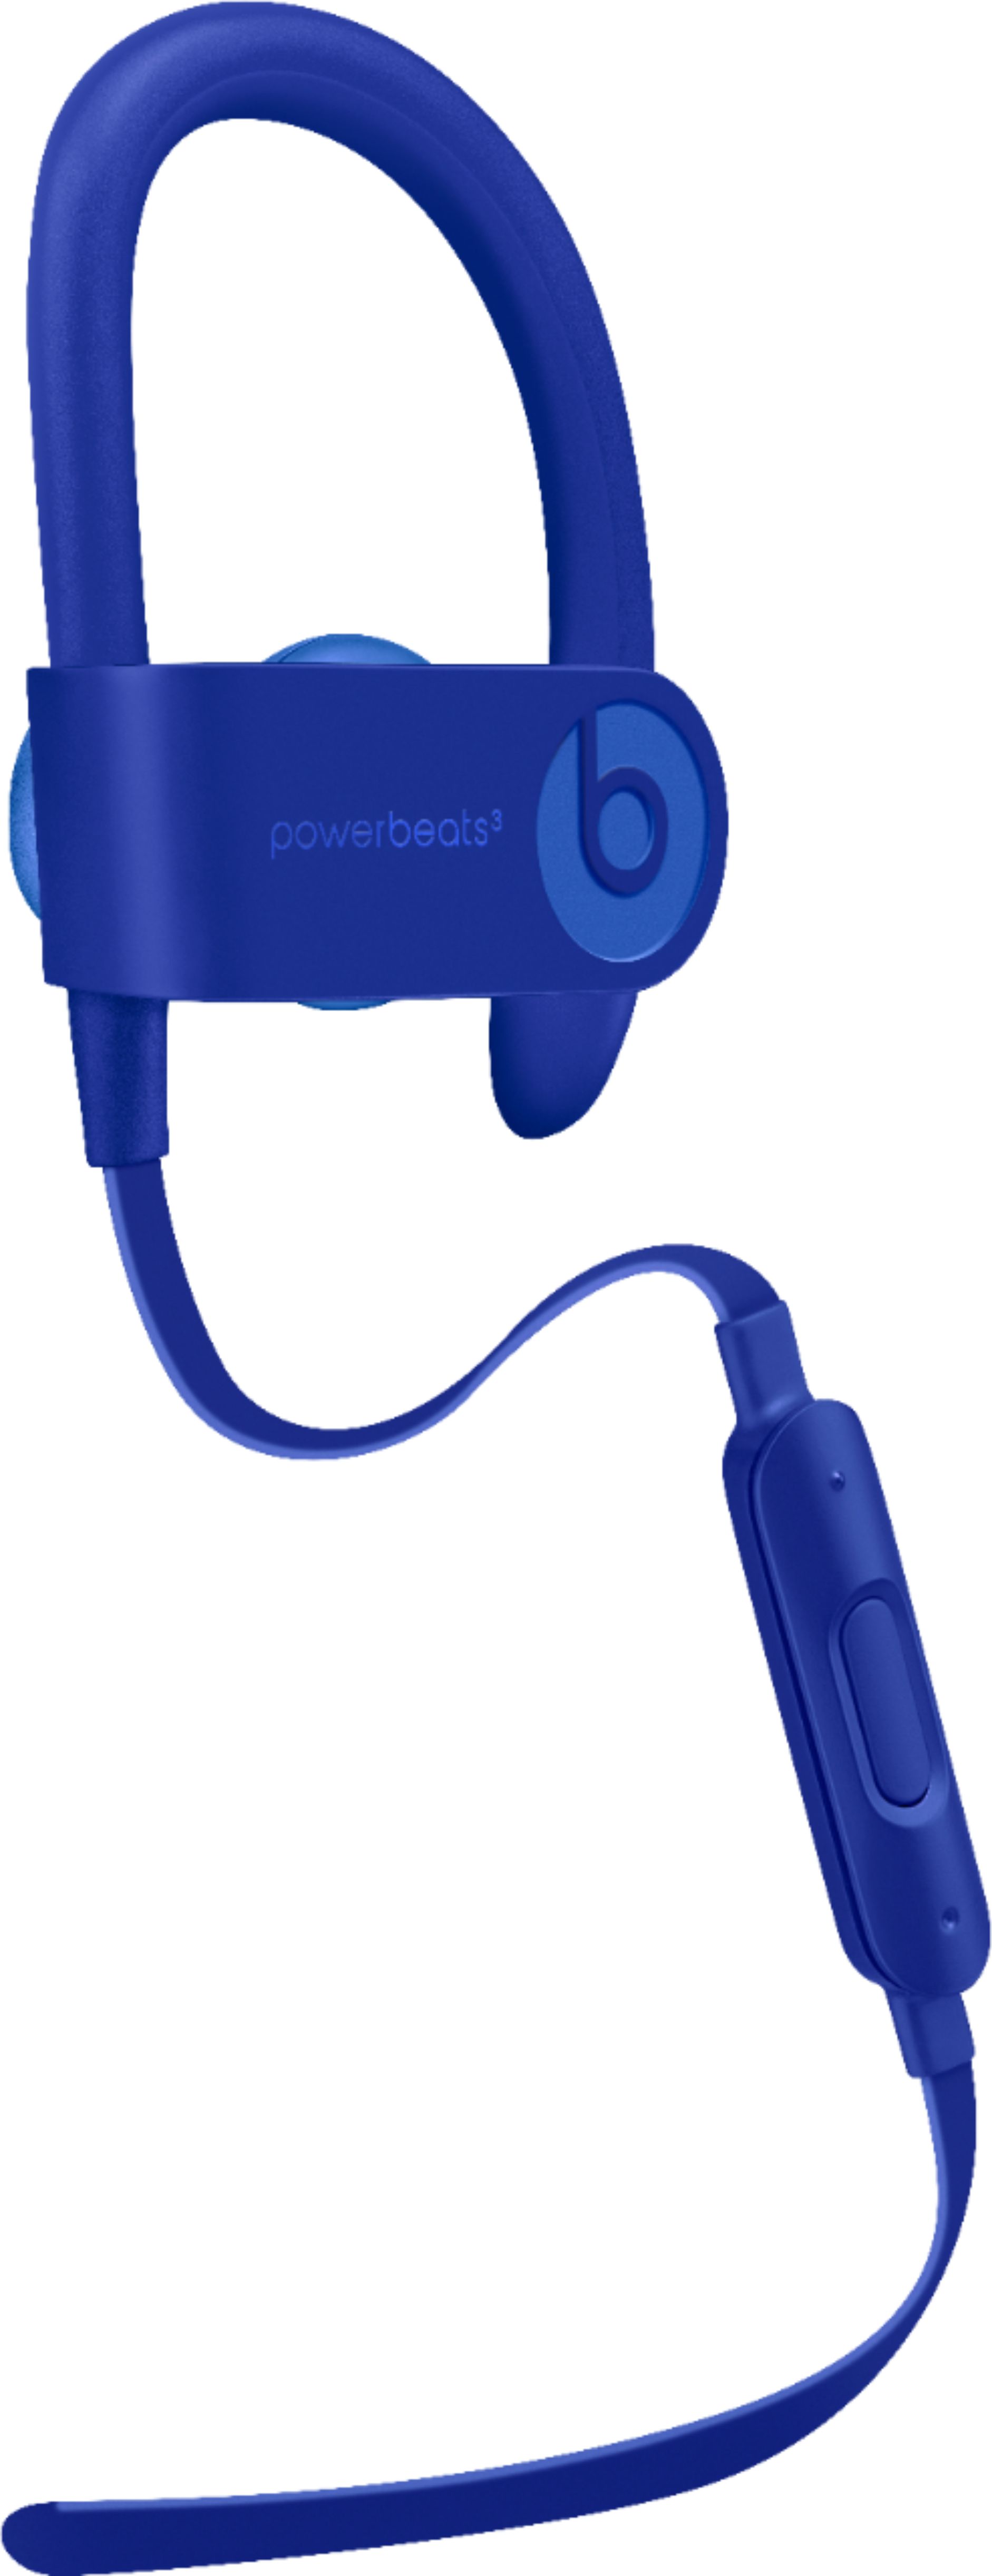 Best Buy: Beats by Dr. Powerbeats3 Wireless Earphones Neighborhood Collection MQ362LL/A